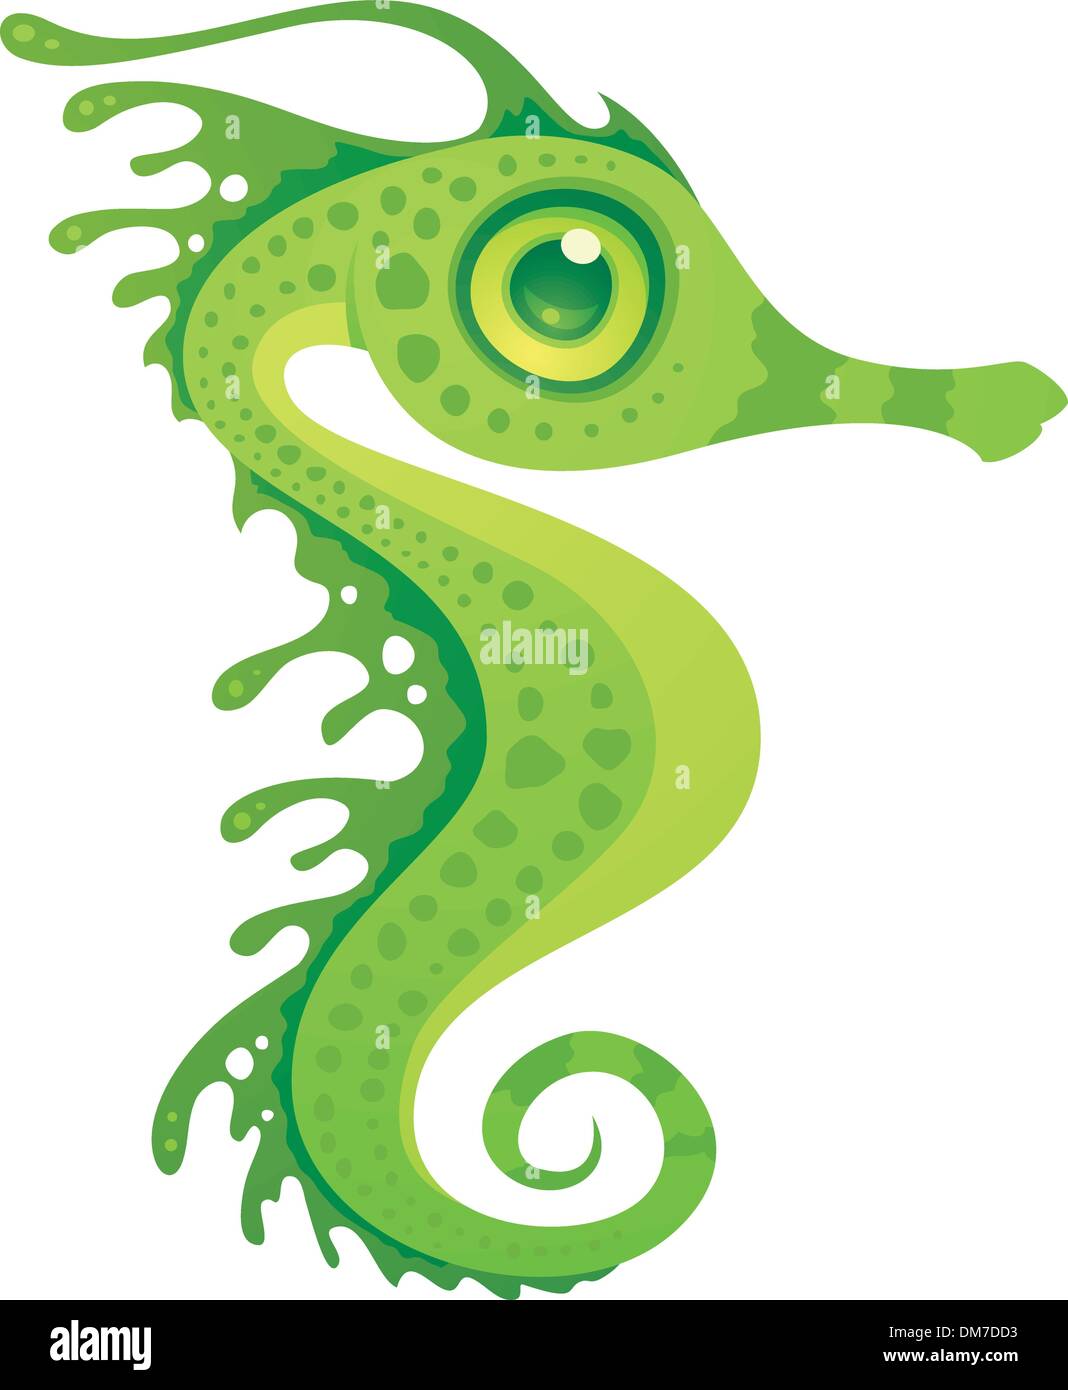 Dragon de mer feuillu Hippocampe Illustration de Vecteur